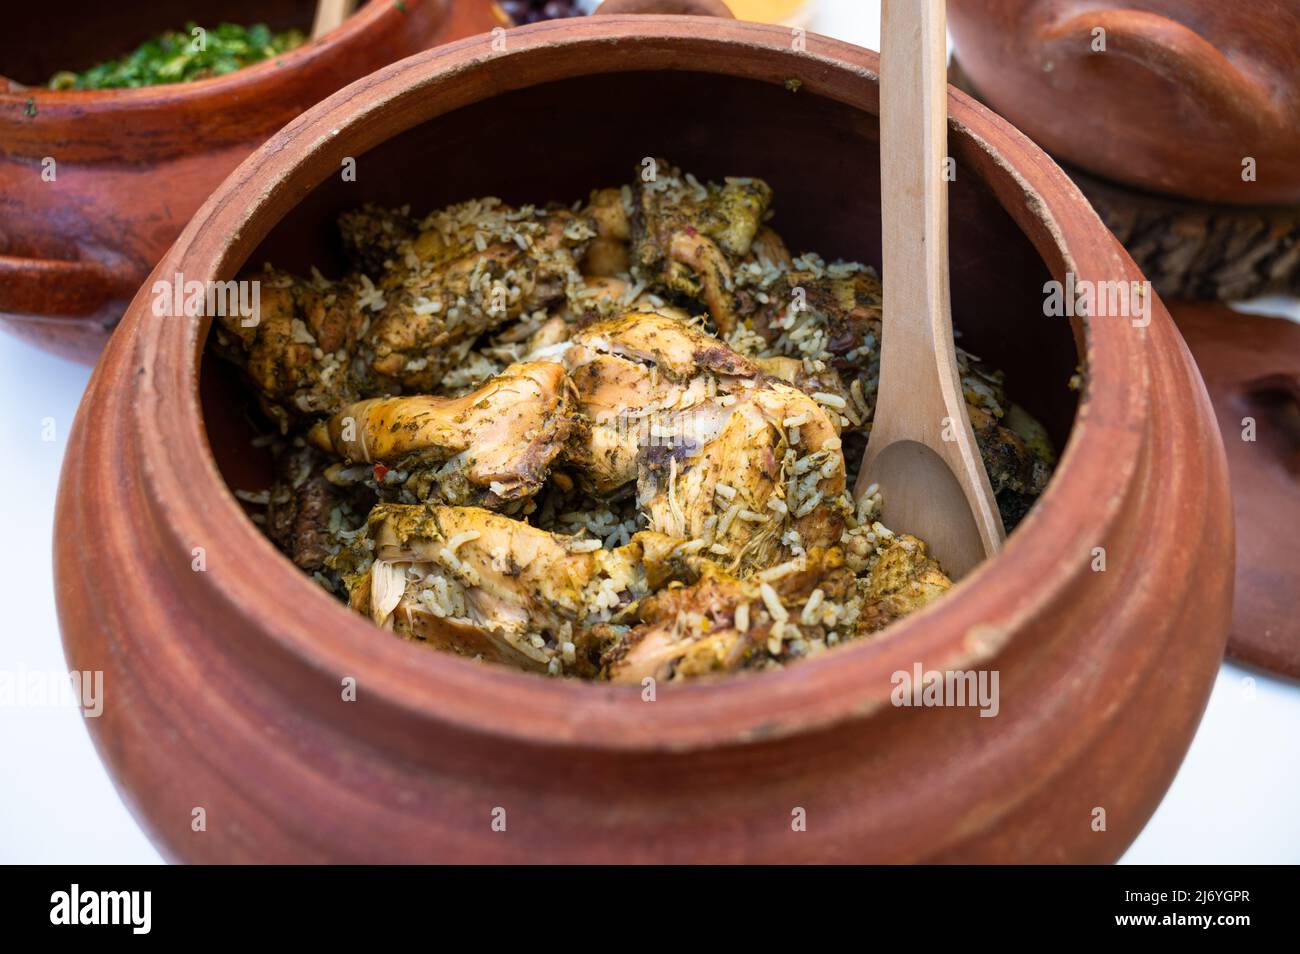 Peruvian cuisine: Chicken and rice called arroz con pollo in a clay pot Stock Photo